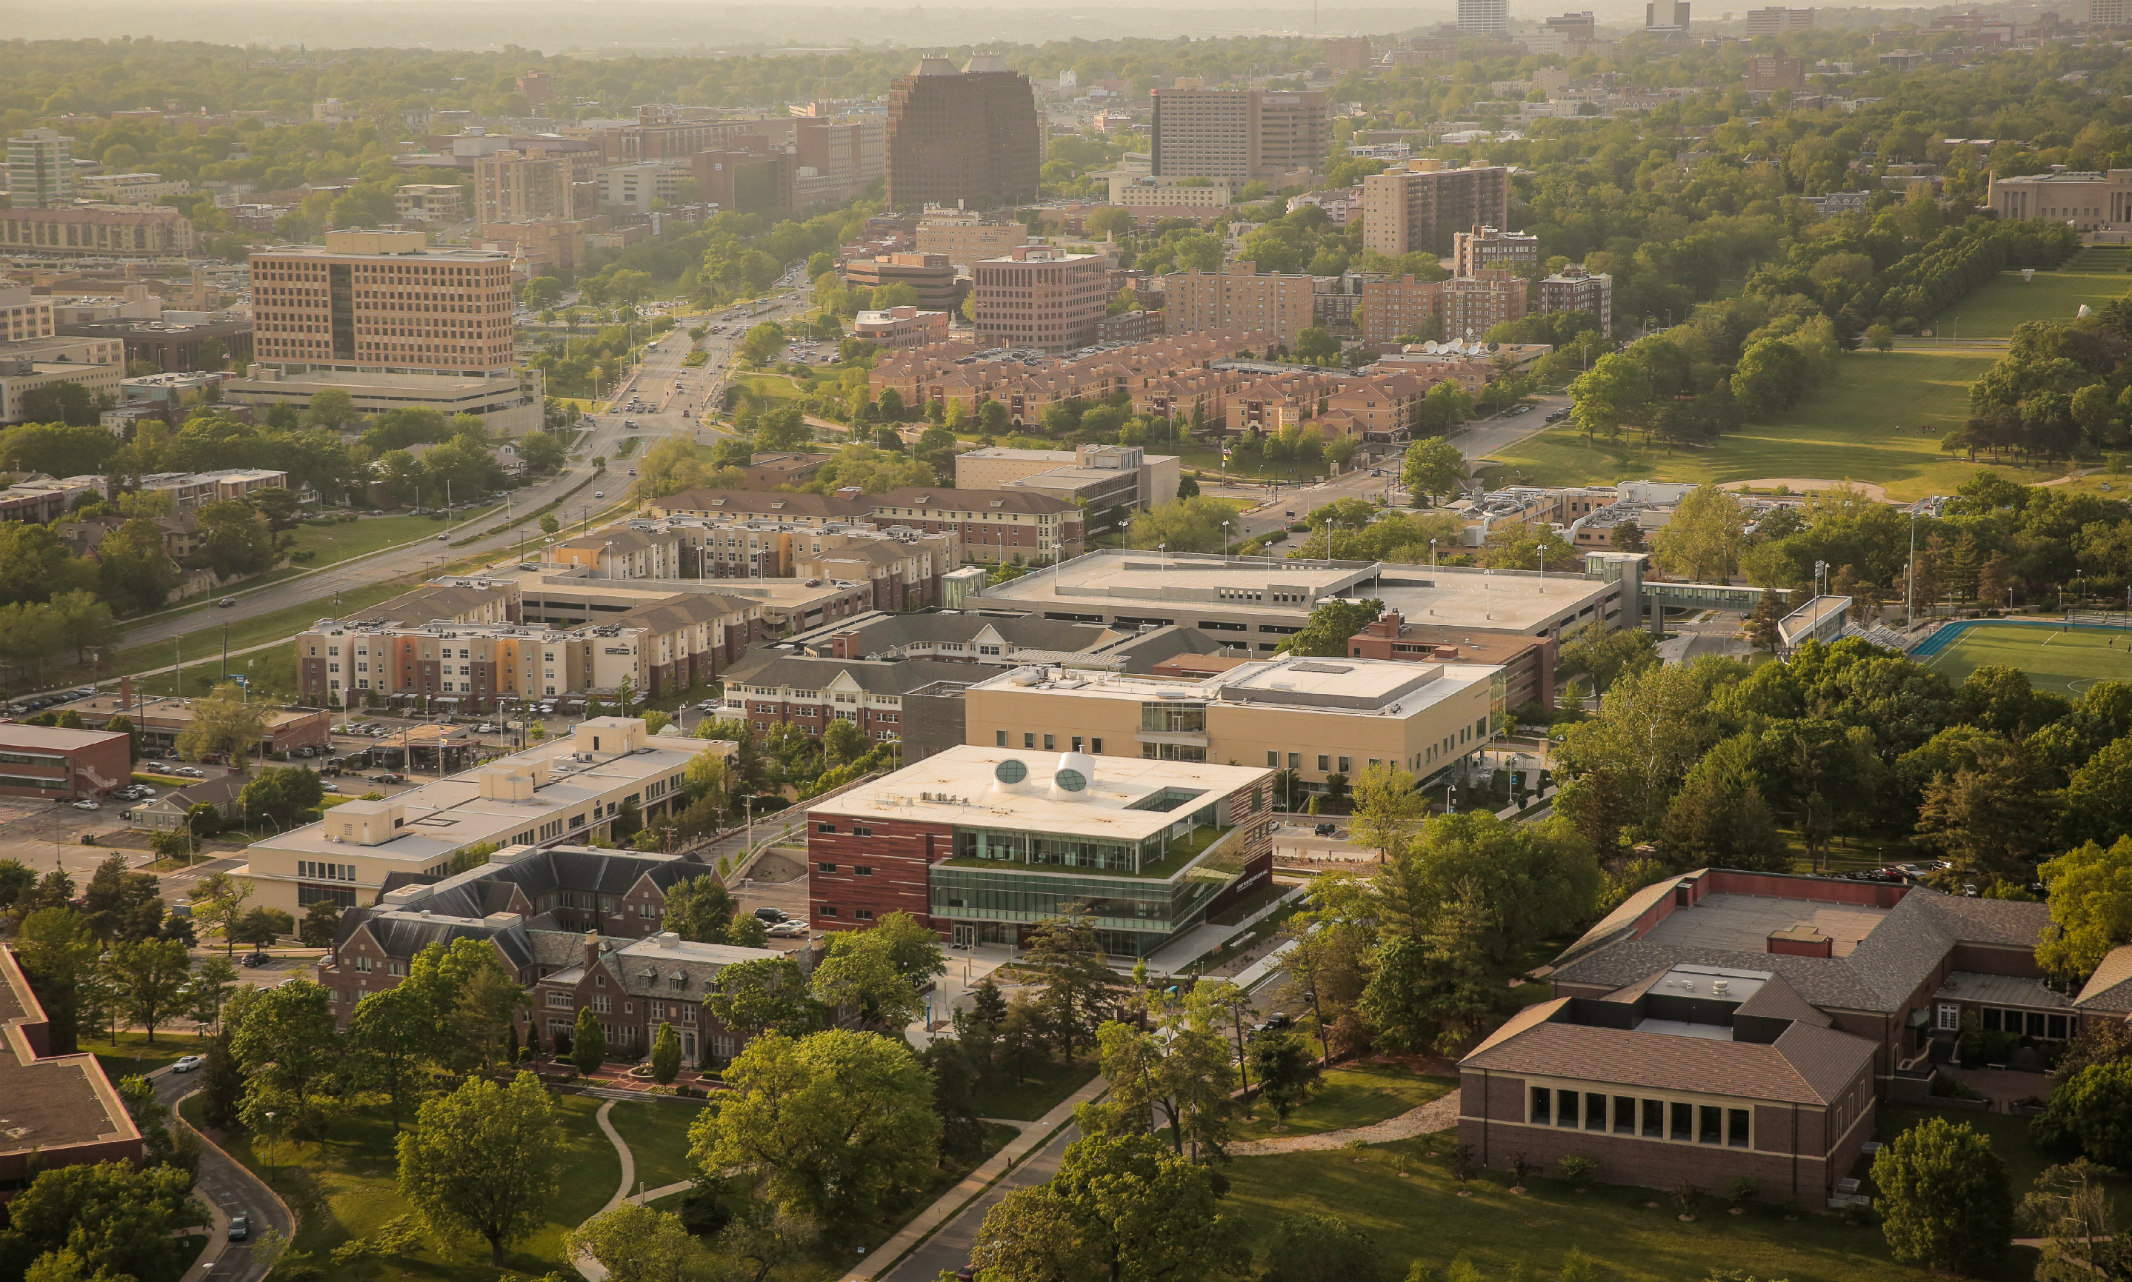 Aerial view of the University of Missouri-Kansas City.